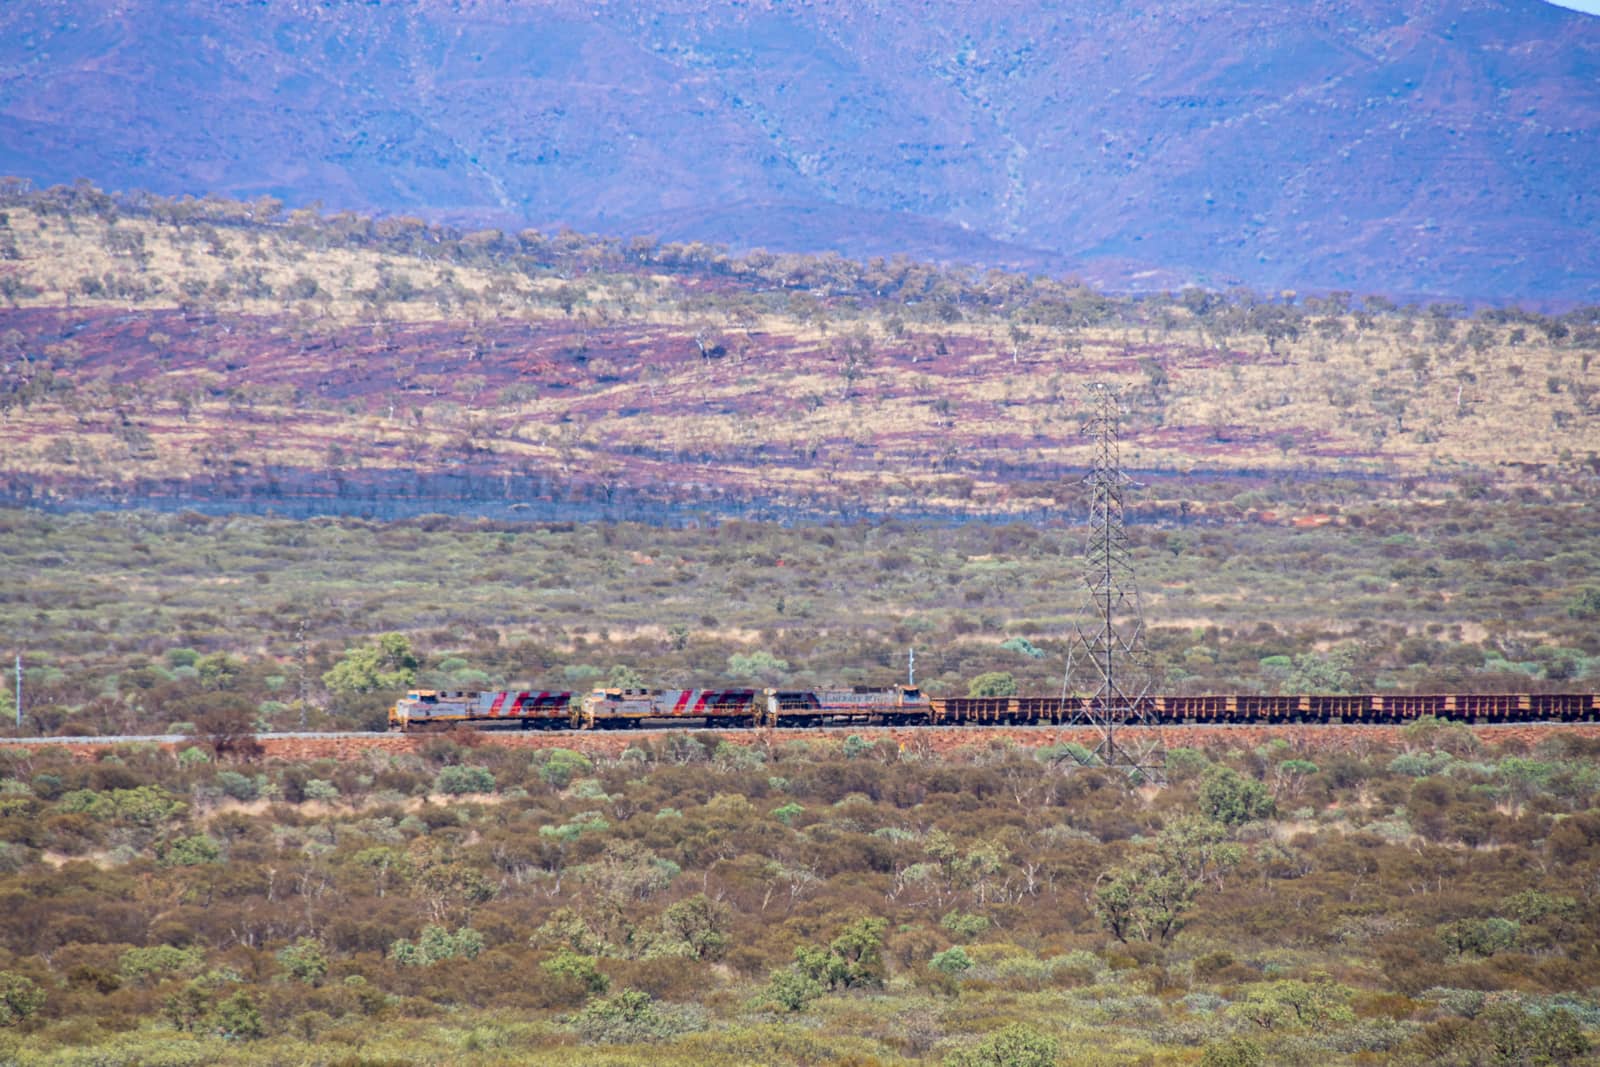 Long train at Karijini National Park transporting iron ore from Marandoo Mine Site towards coast by MXW_Stock